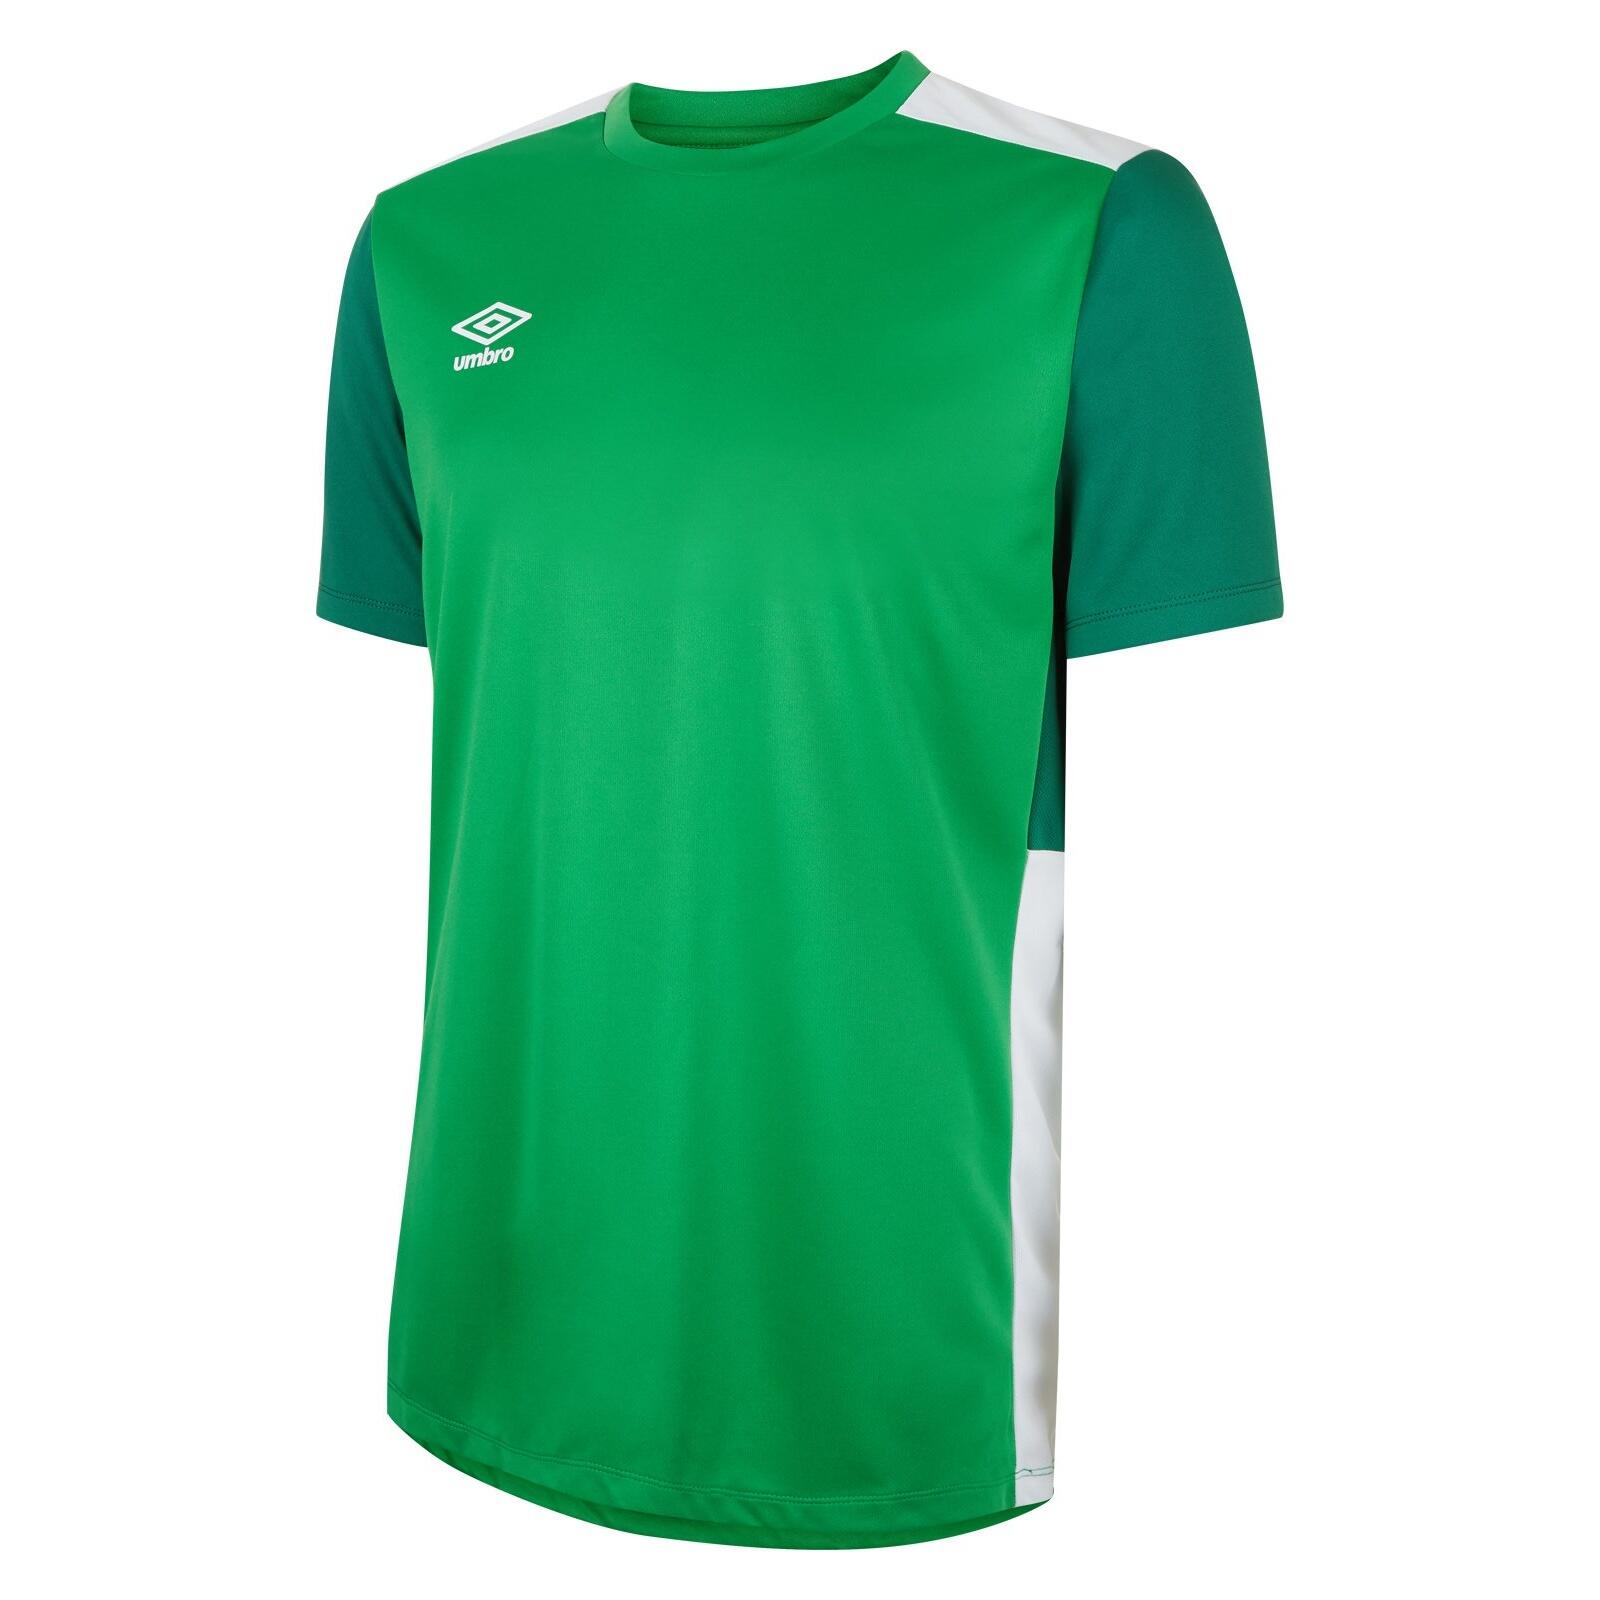 UMBRO Boys Polyester Training Jersey (Emerald Green/Verdant Green/White)